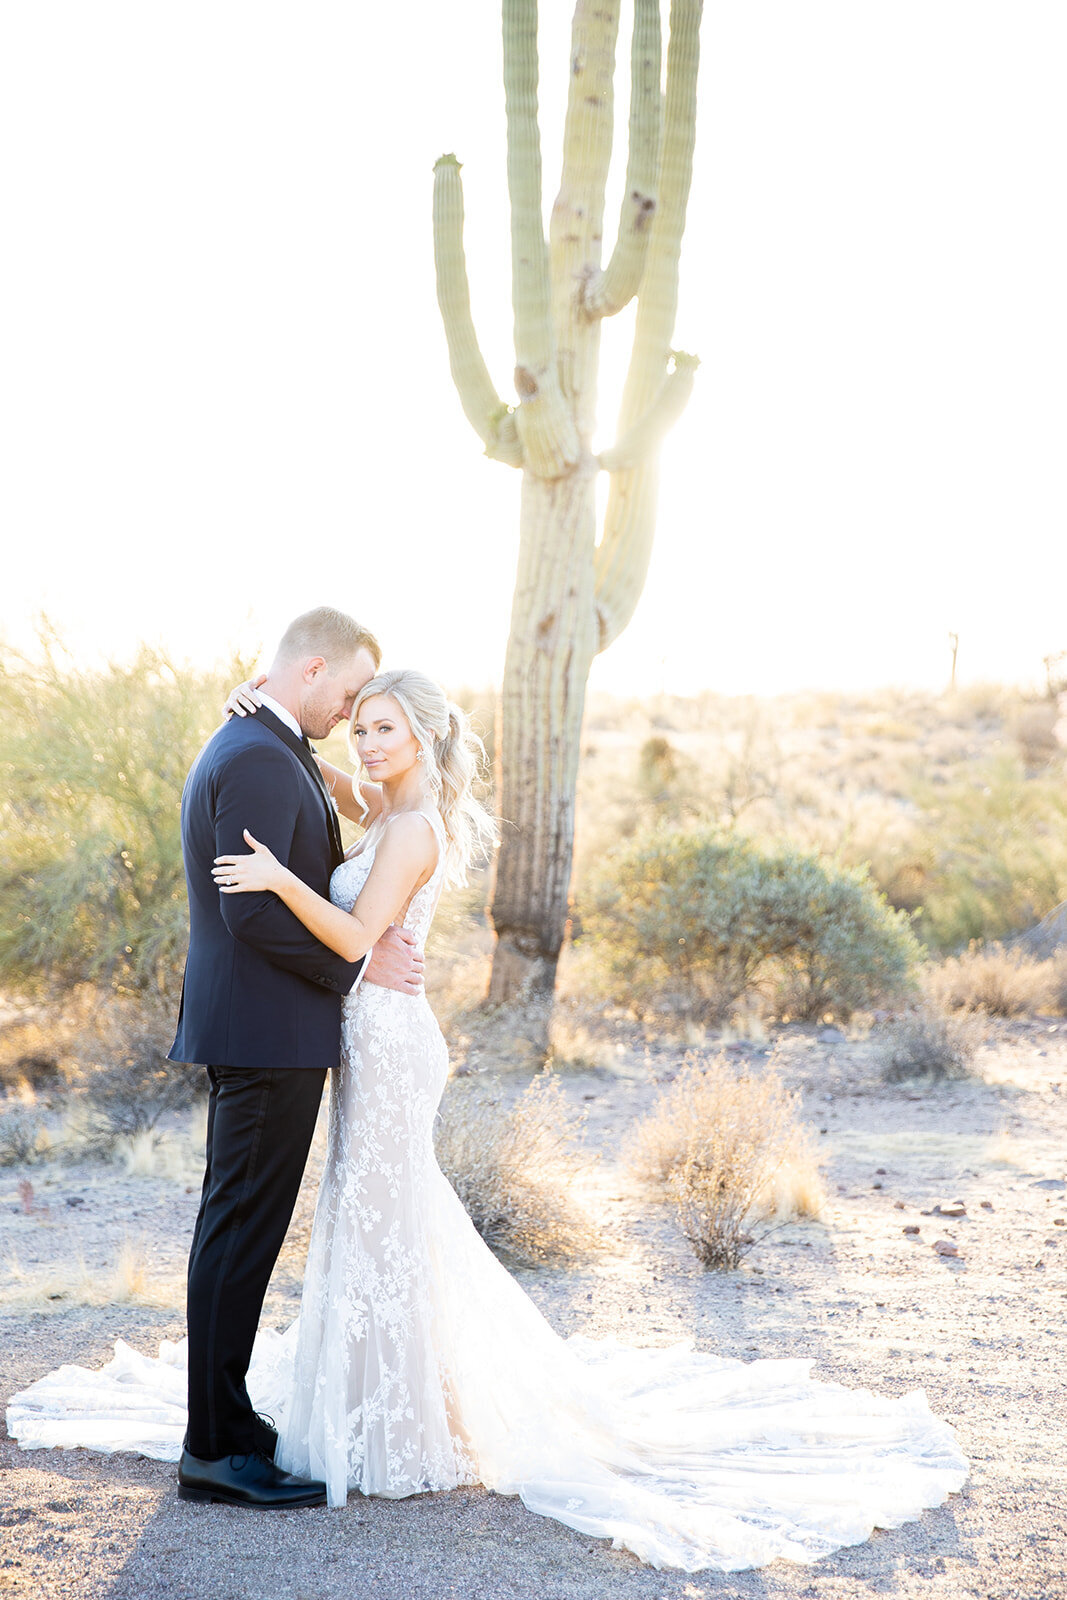 Karlie Colleen Photography - Ashley & Grant Wedding - The Paseo - Phoenix Arizona-766